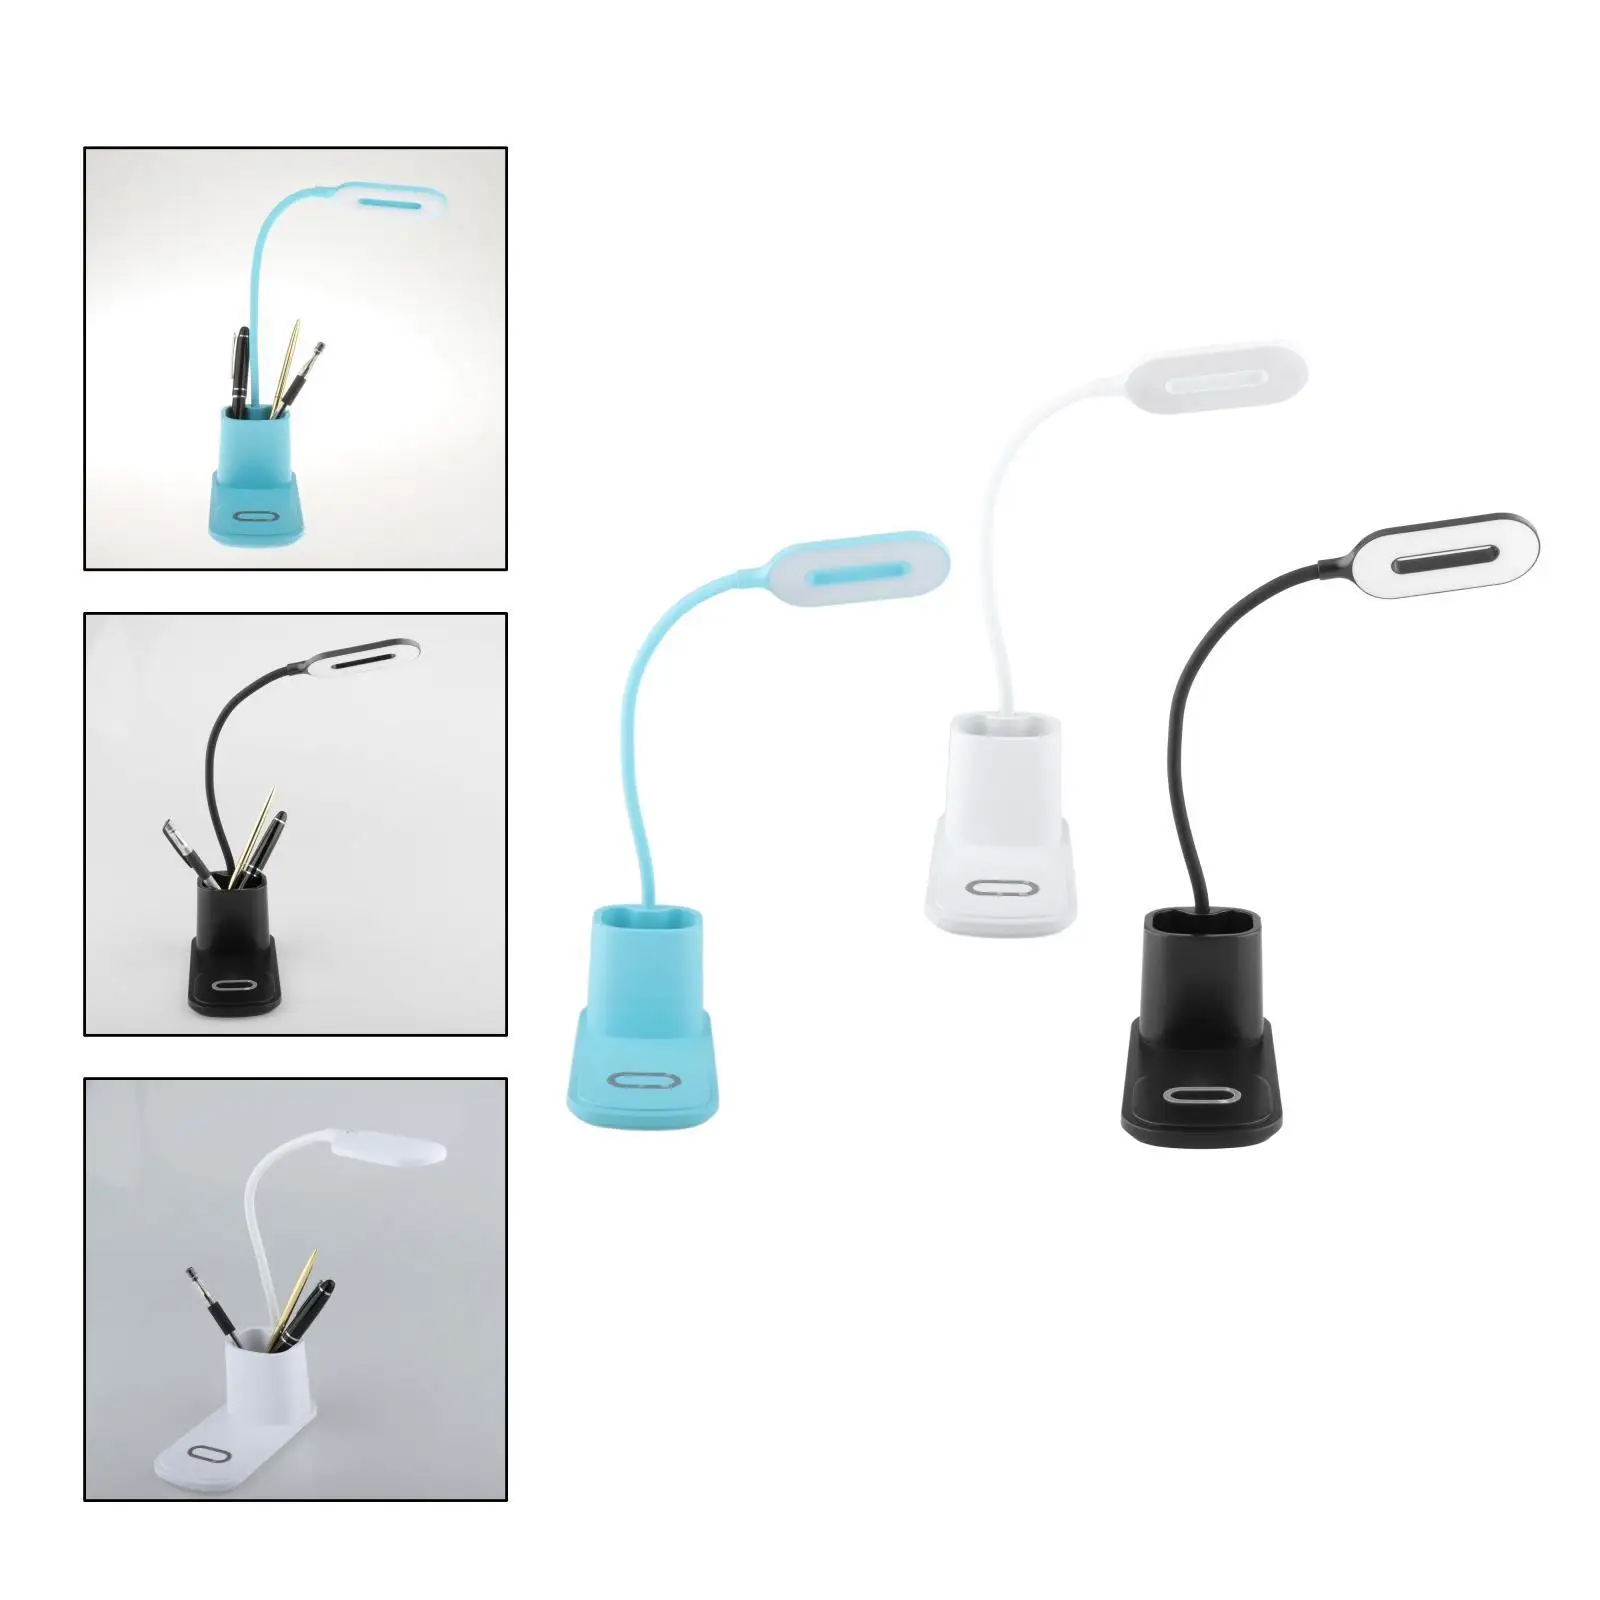  Charging LED Desk Lamp 10W with 3 Brightness Levels Eye  Reading  Lamp